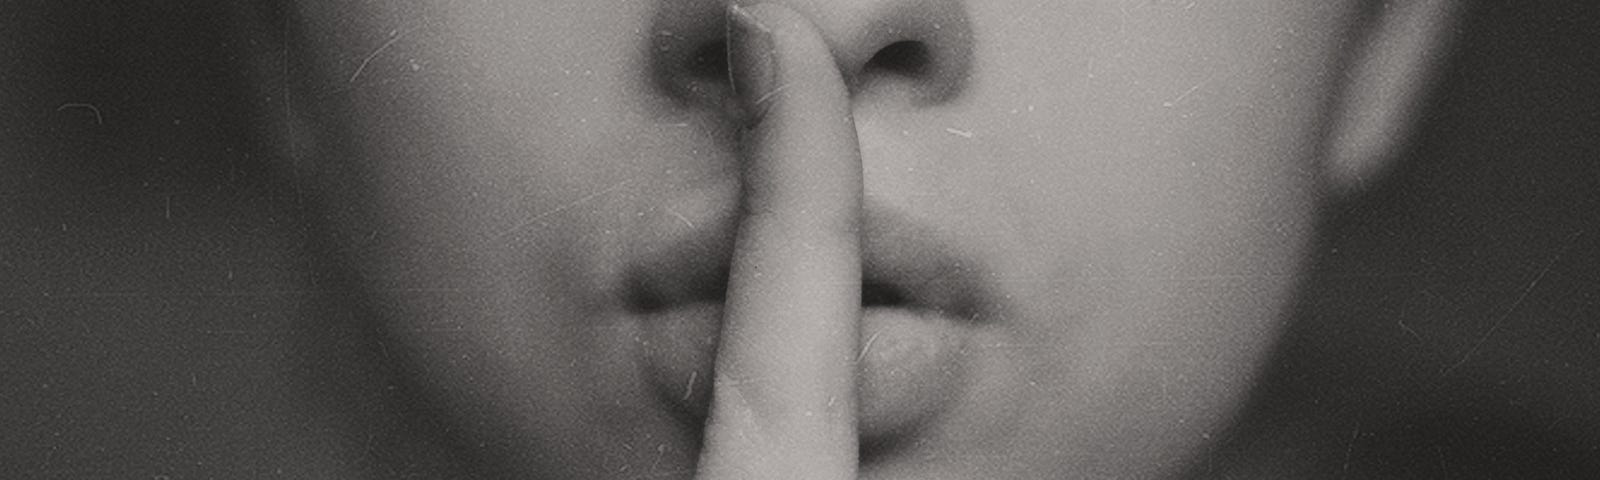 secret, finger on the woman lip.